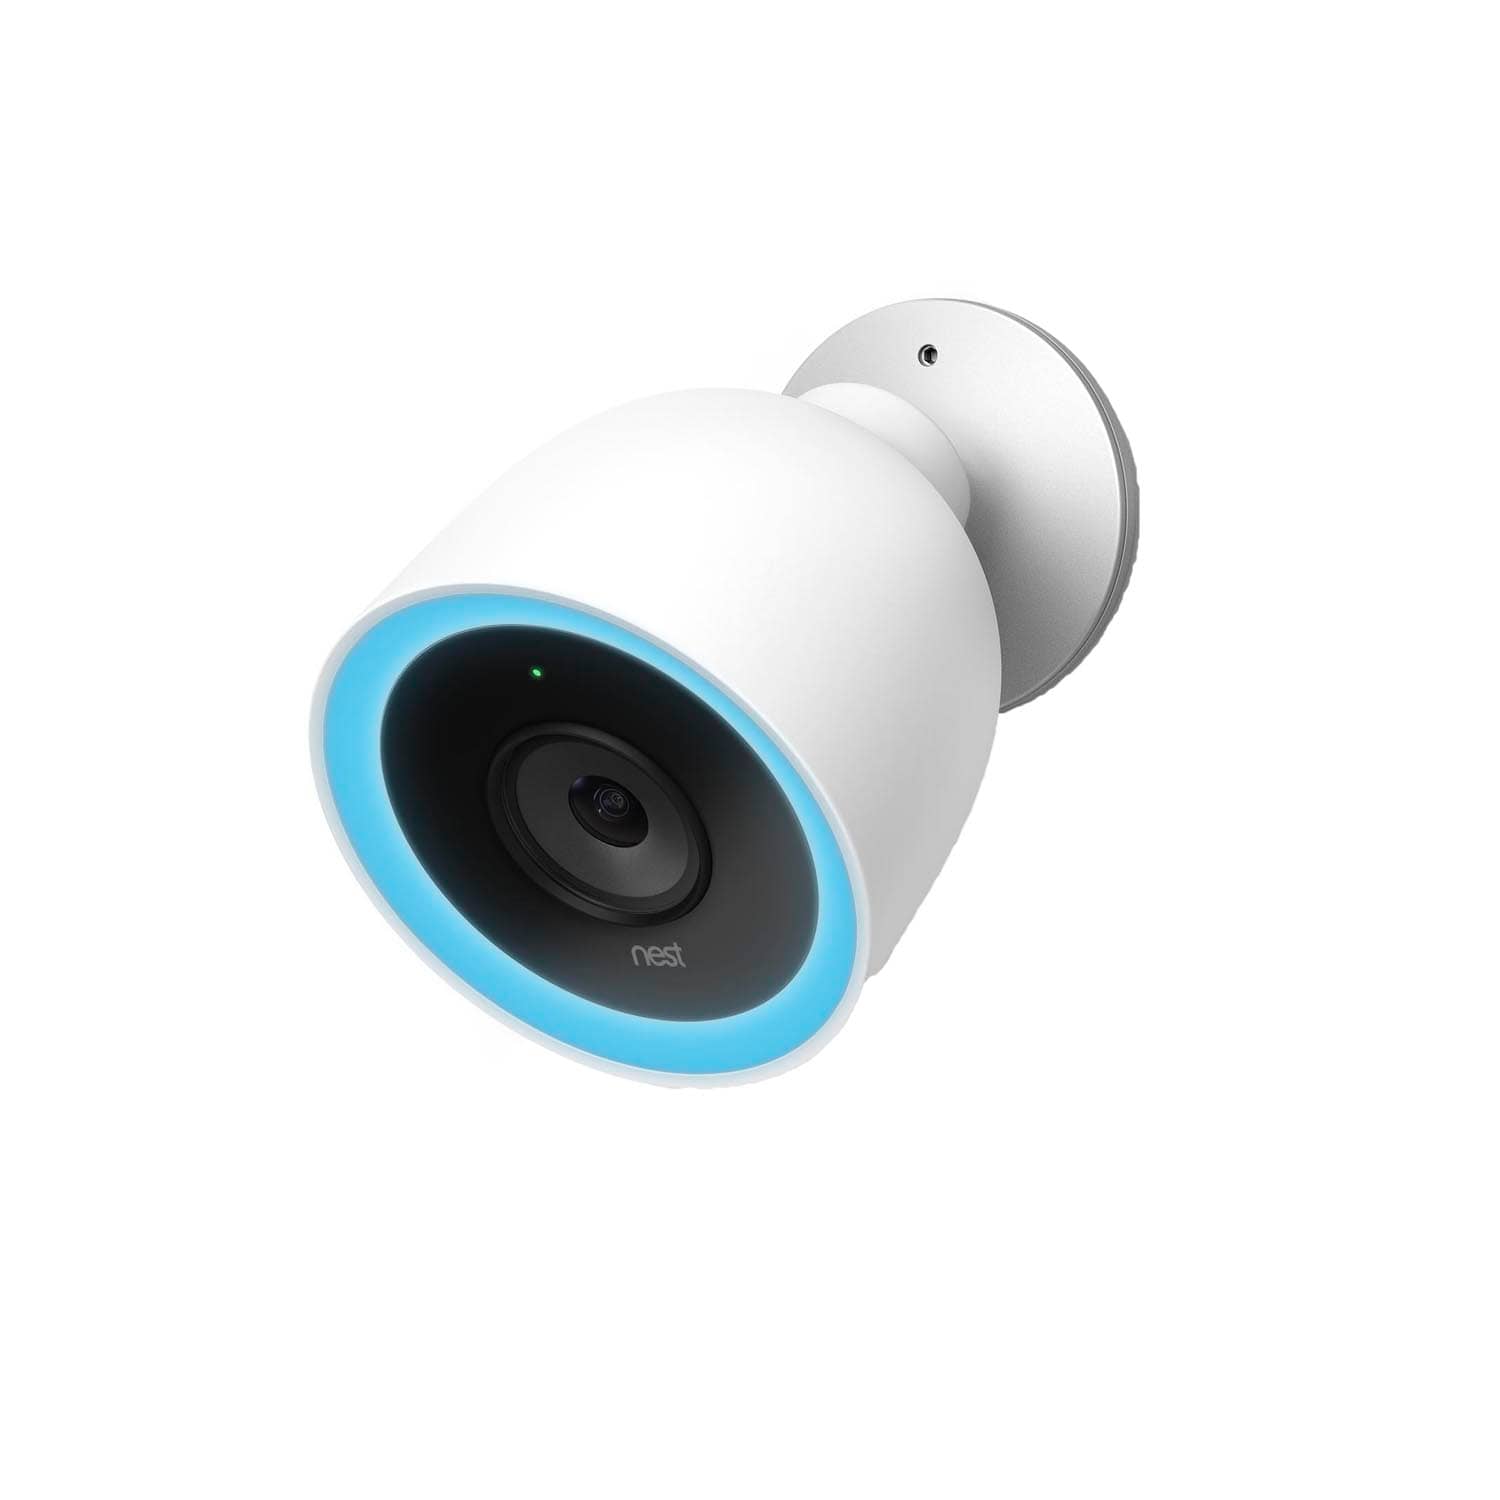  Nest Cam IQ - Outdoor Security Camera